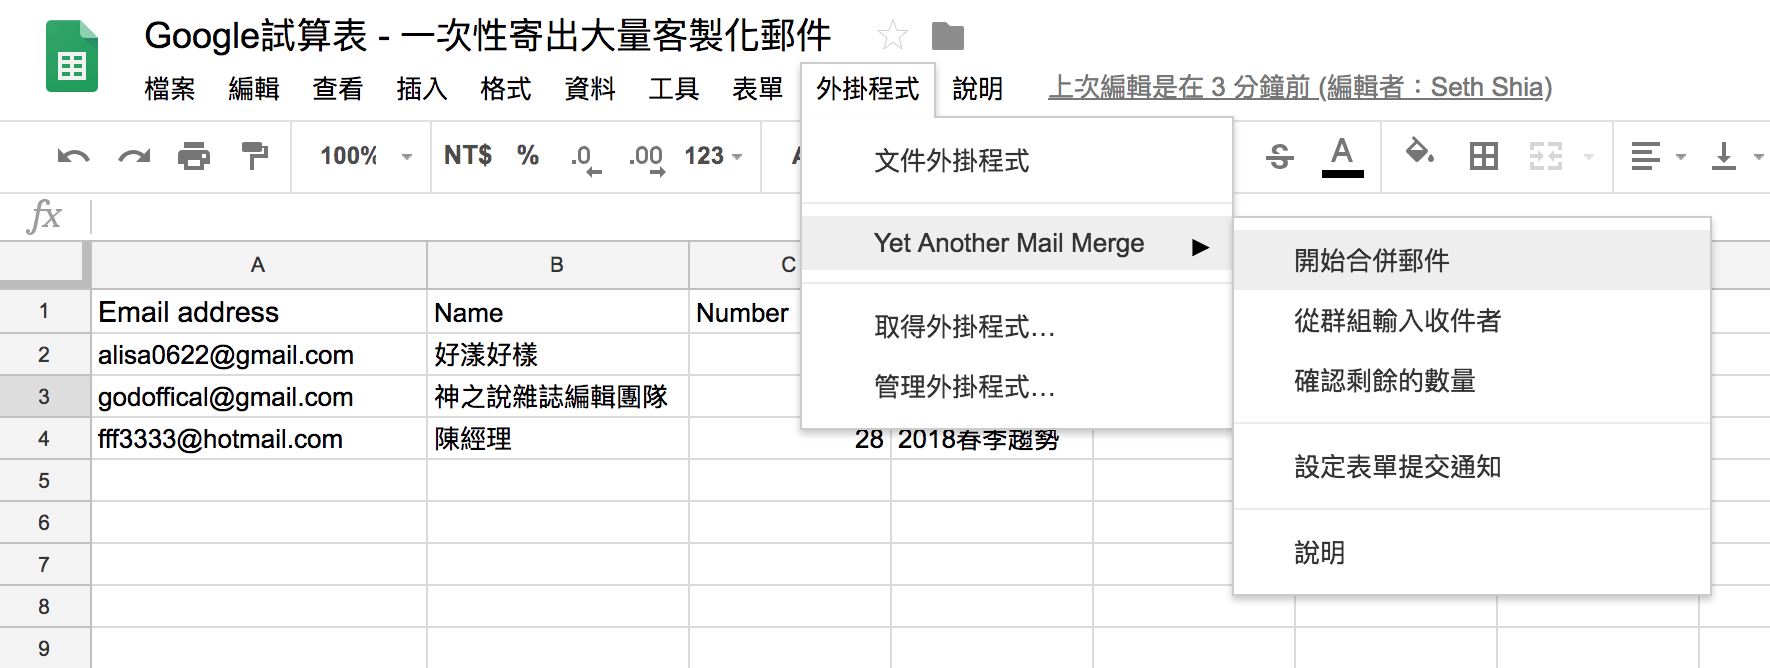 使用yet another mail merge 在gmail一次寄出大量郵件 04